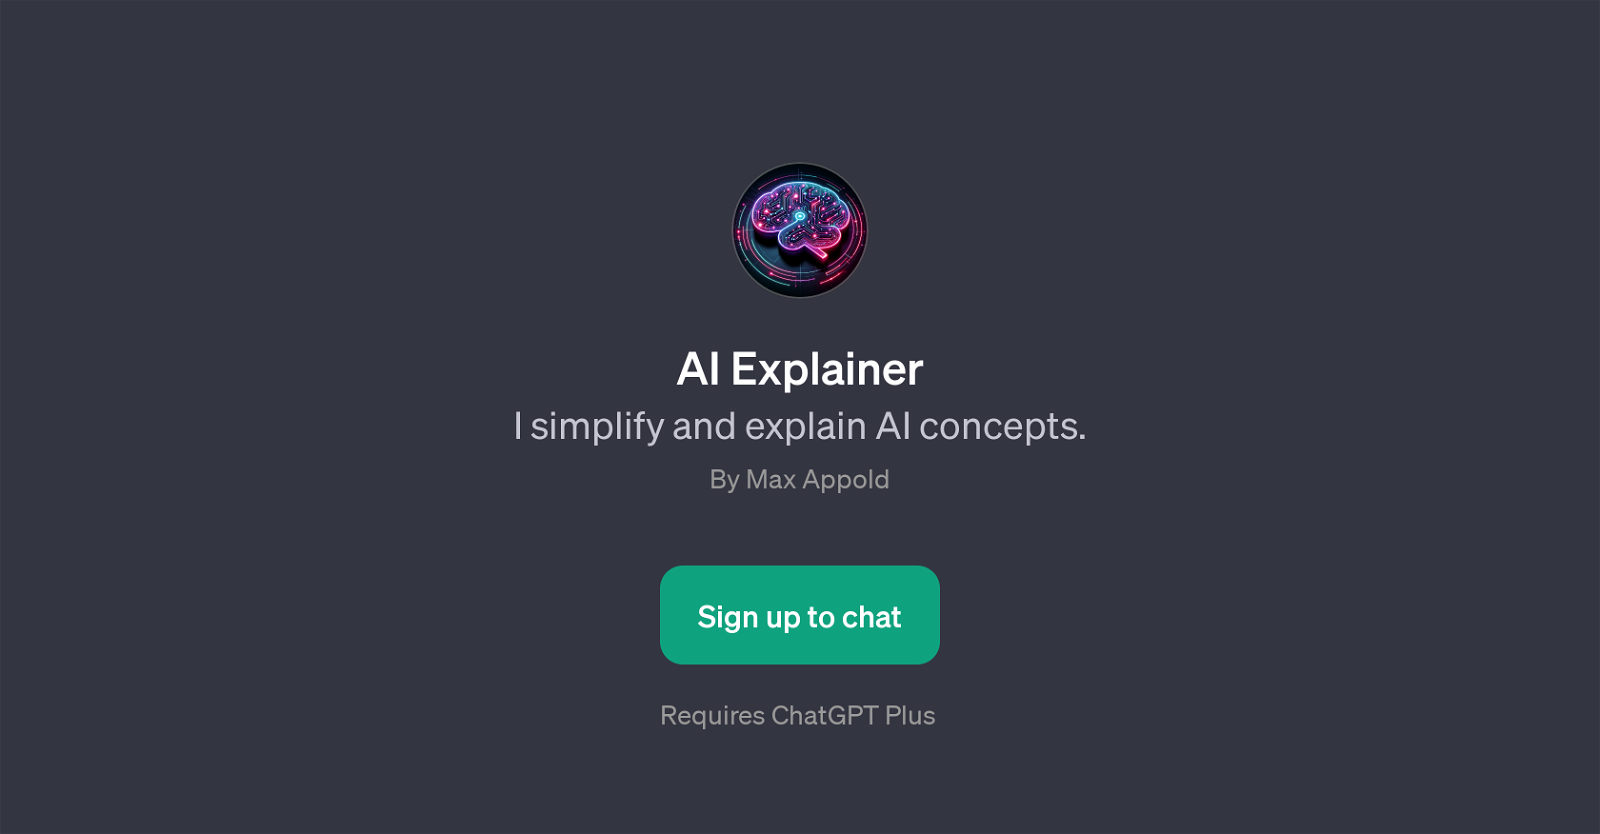 AI Explainer website